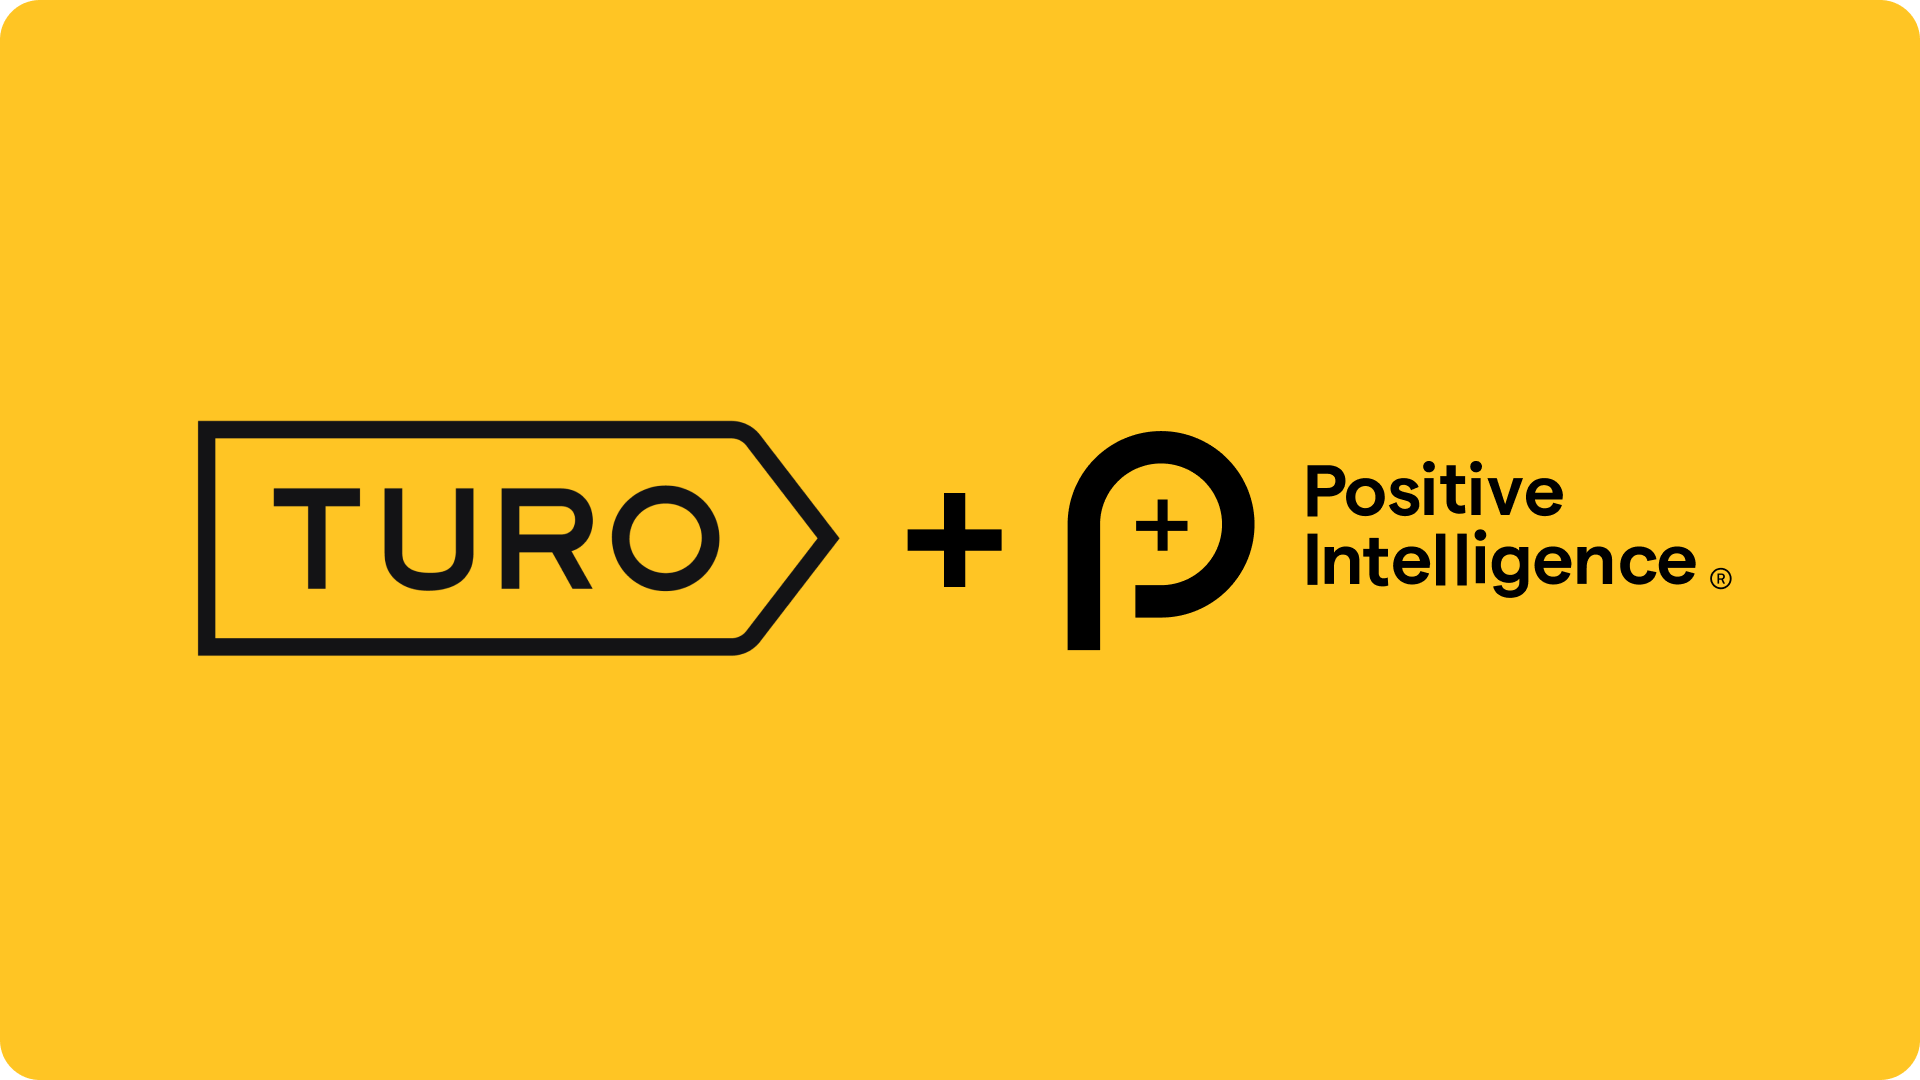 Turo and Positive Intelligence logos